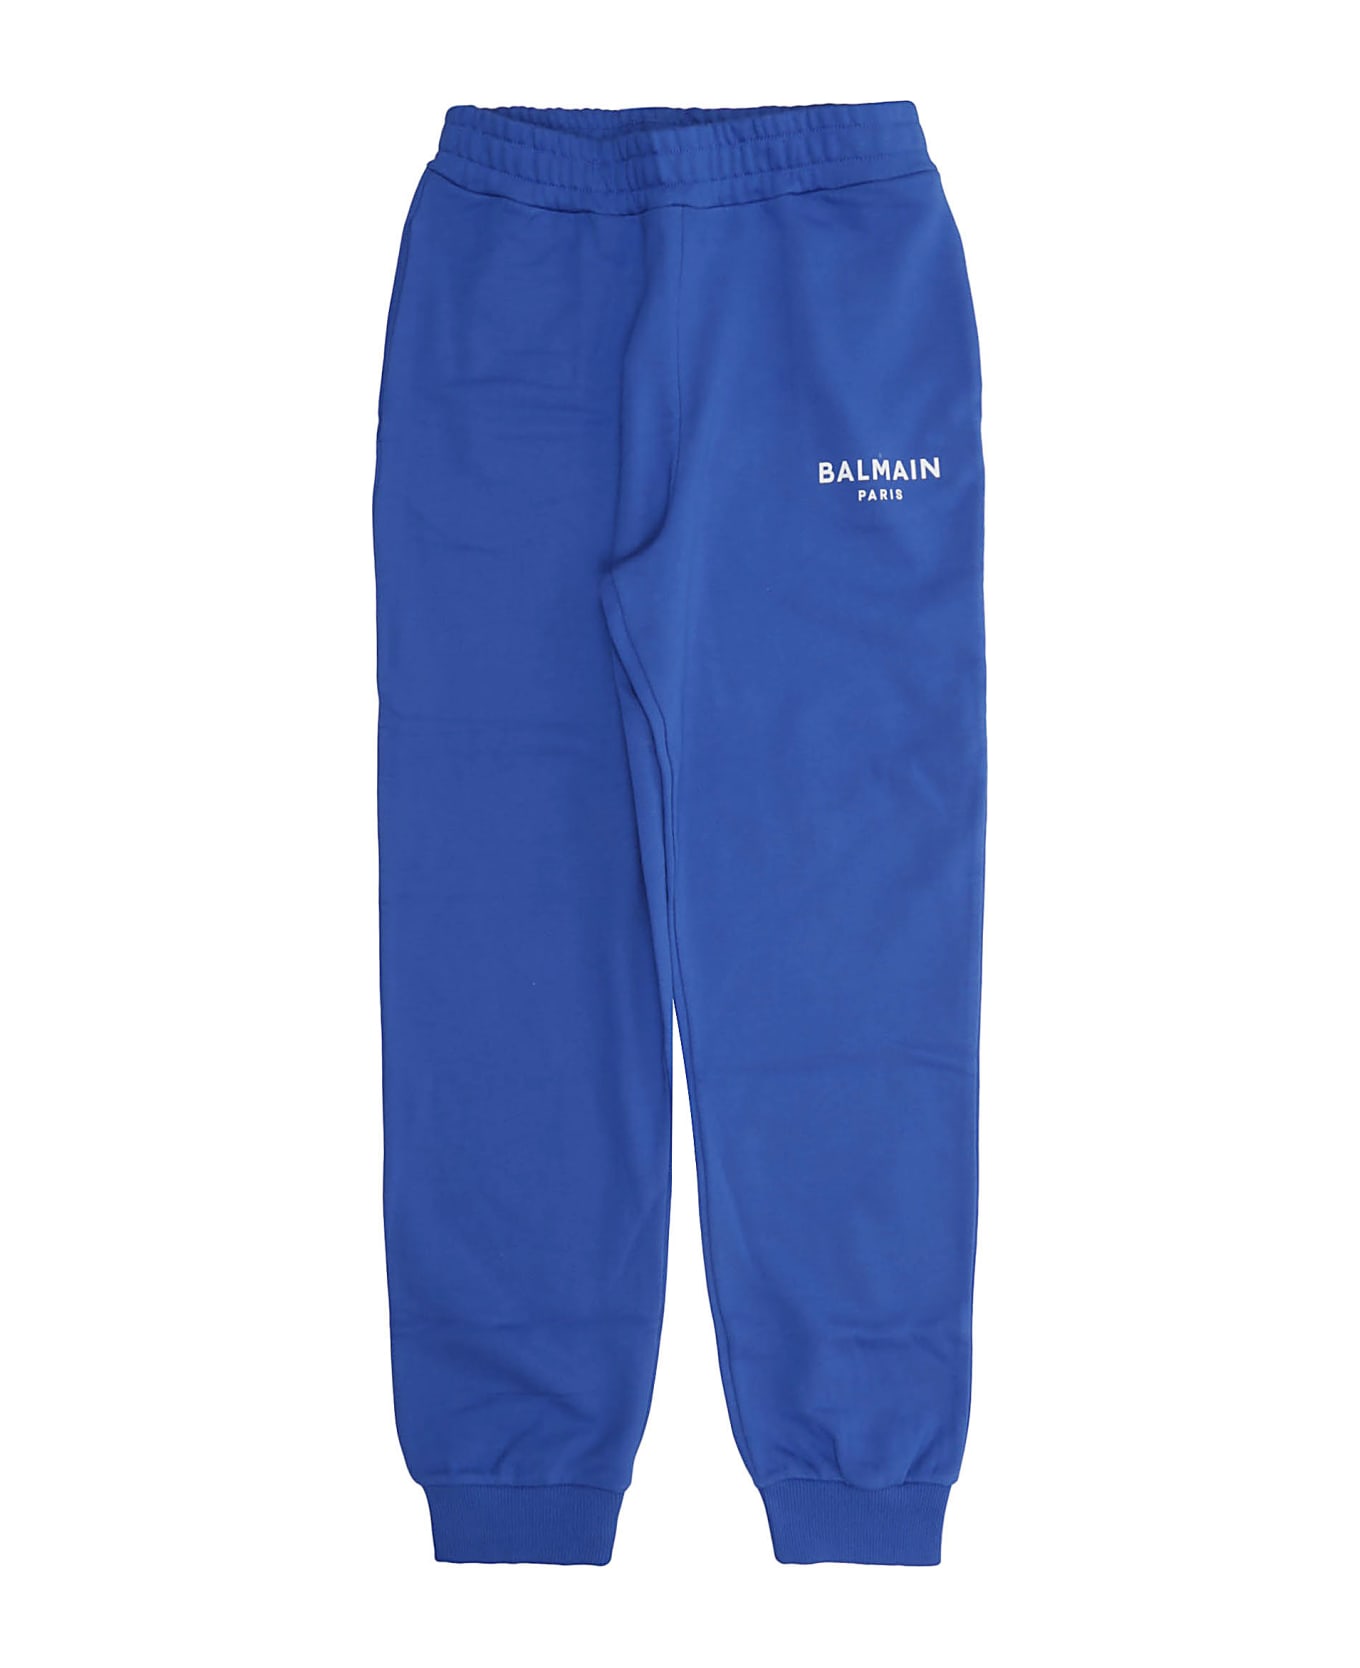 Balmain Pants - Blu ボトムス